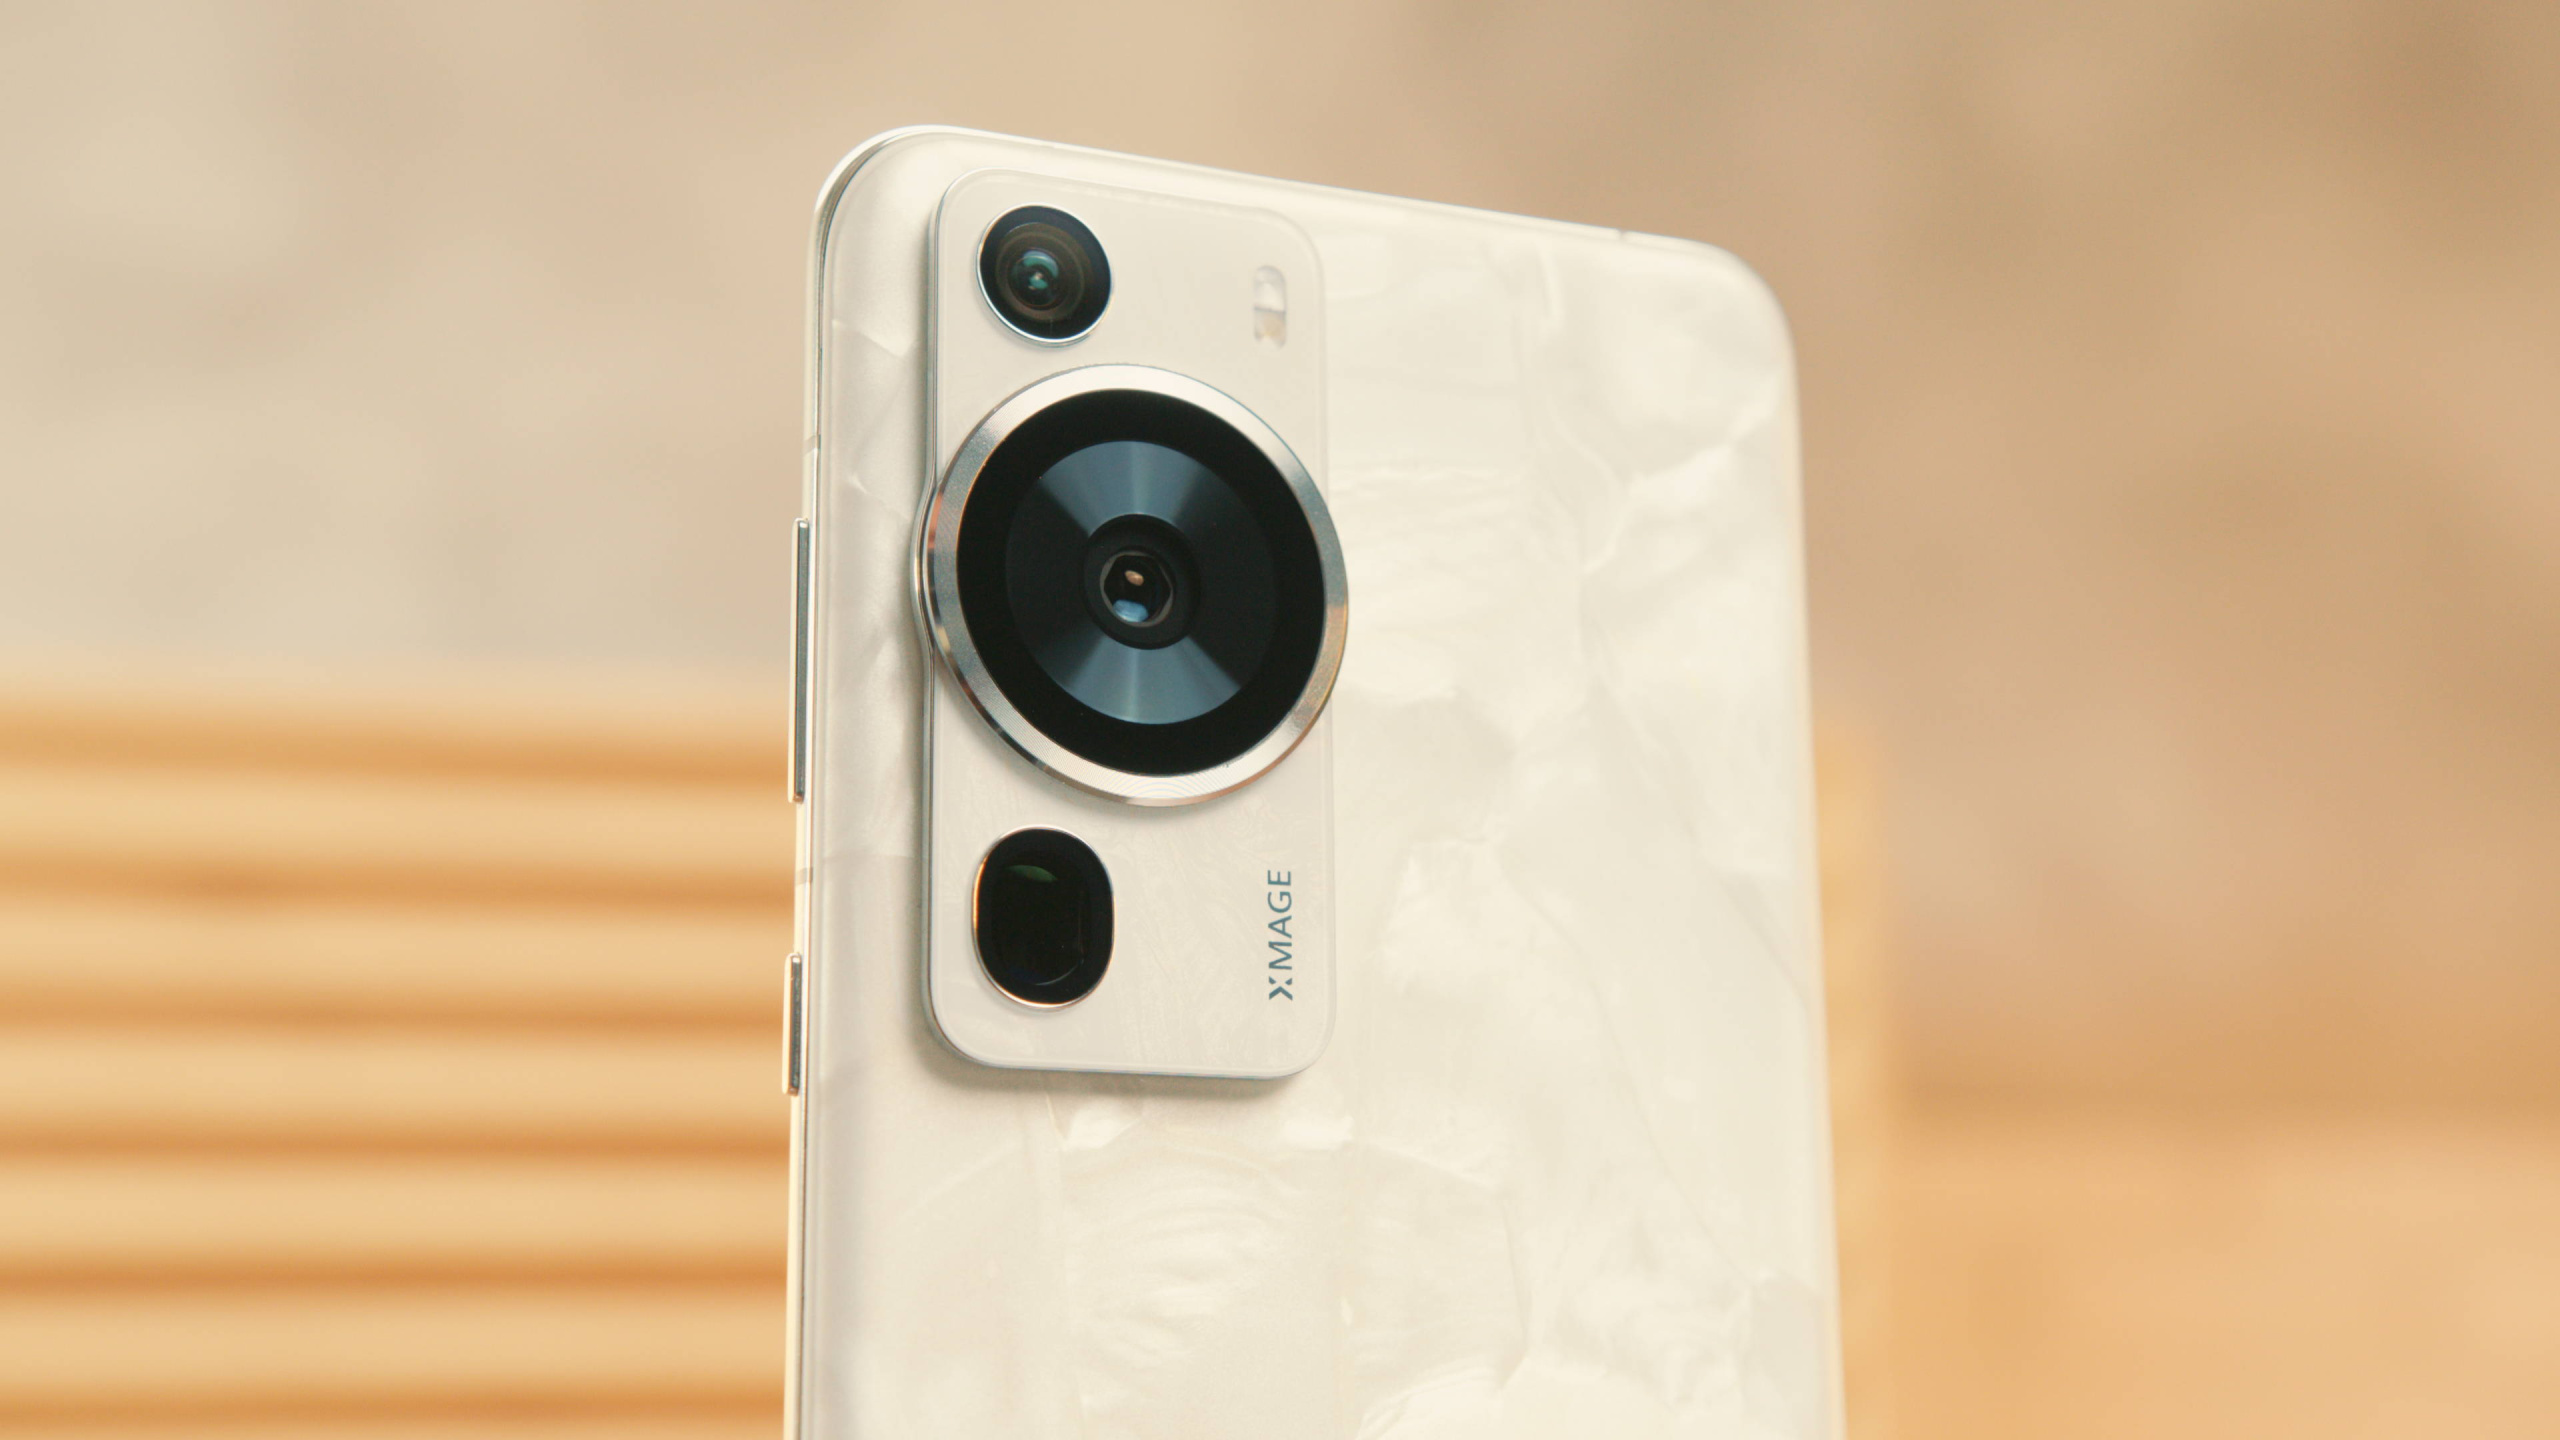 Huawei P70 bi mogao da donese napredni sistem sa promenljivim otvorom blende